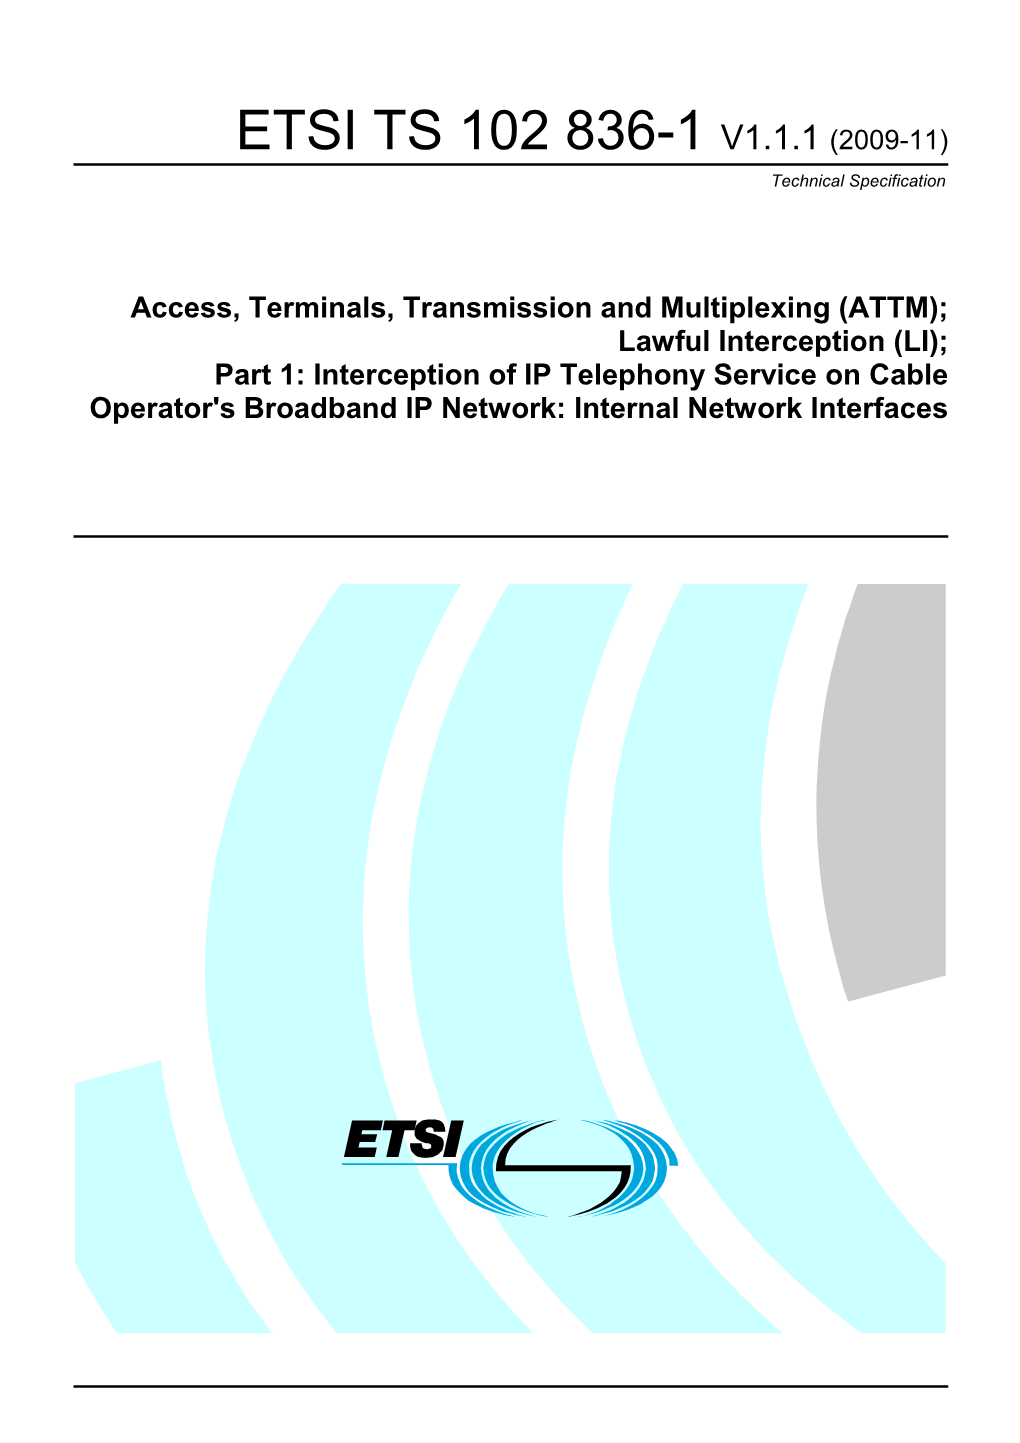 TS 102 836-1 V1.1.1 (2009-11) Technical Specification